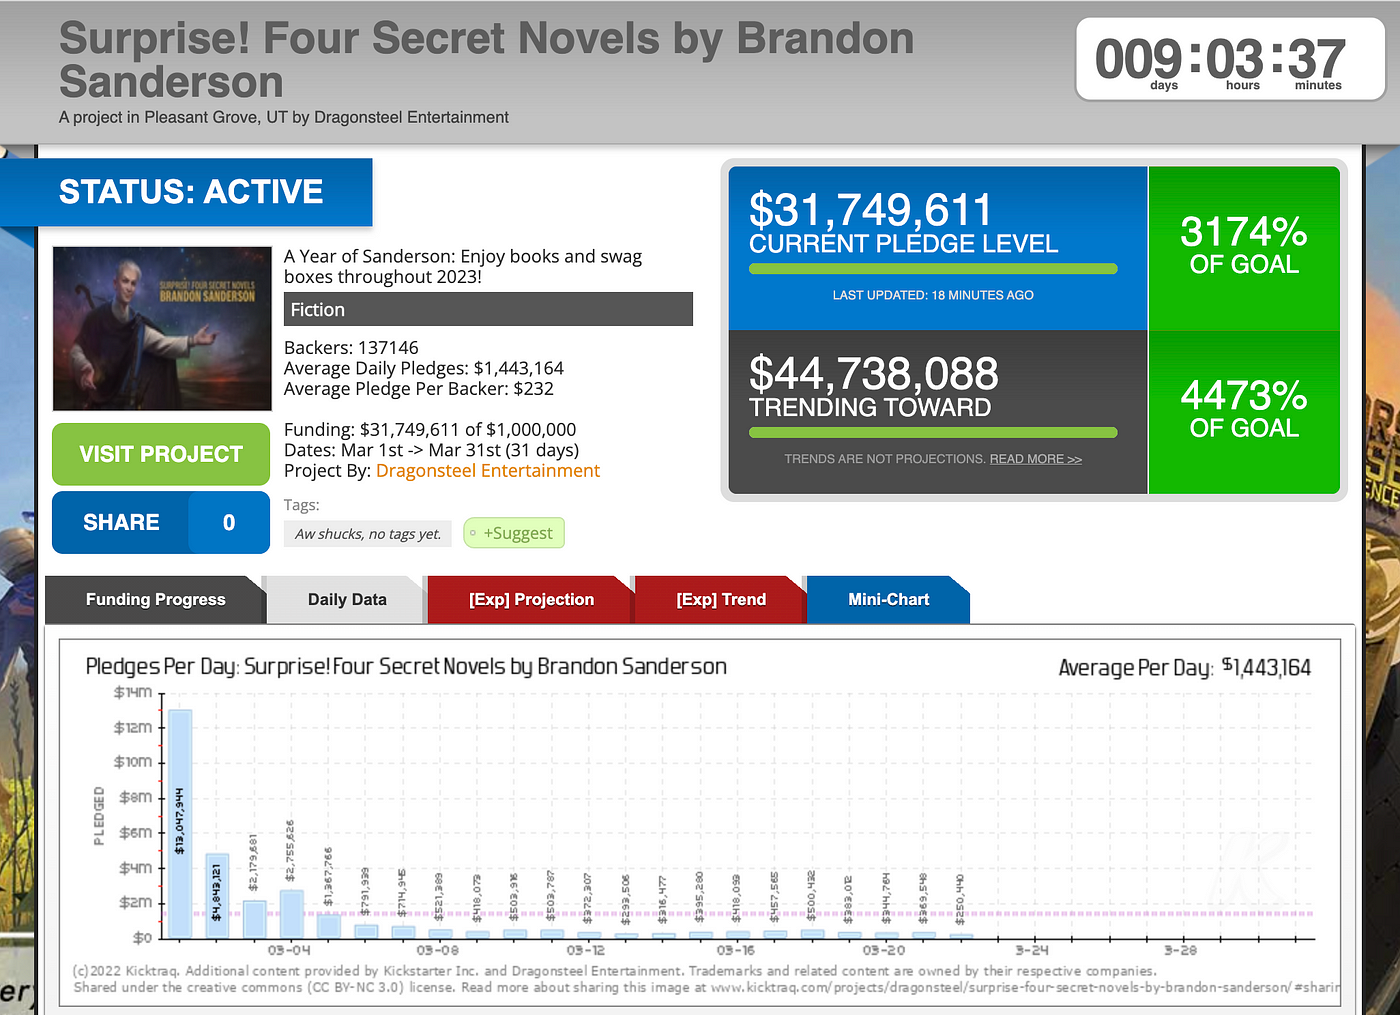 After raising $33 million on Kickstarter, Brandon Sanderson backs 316 other  crowdfunding projects - Tubefilter